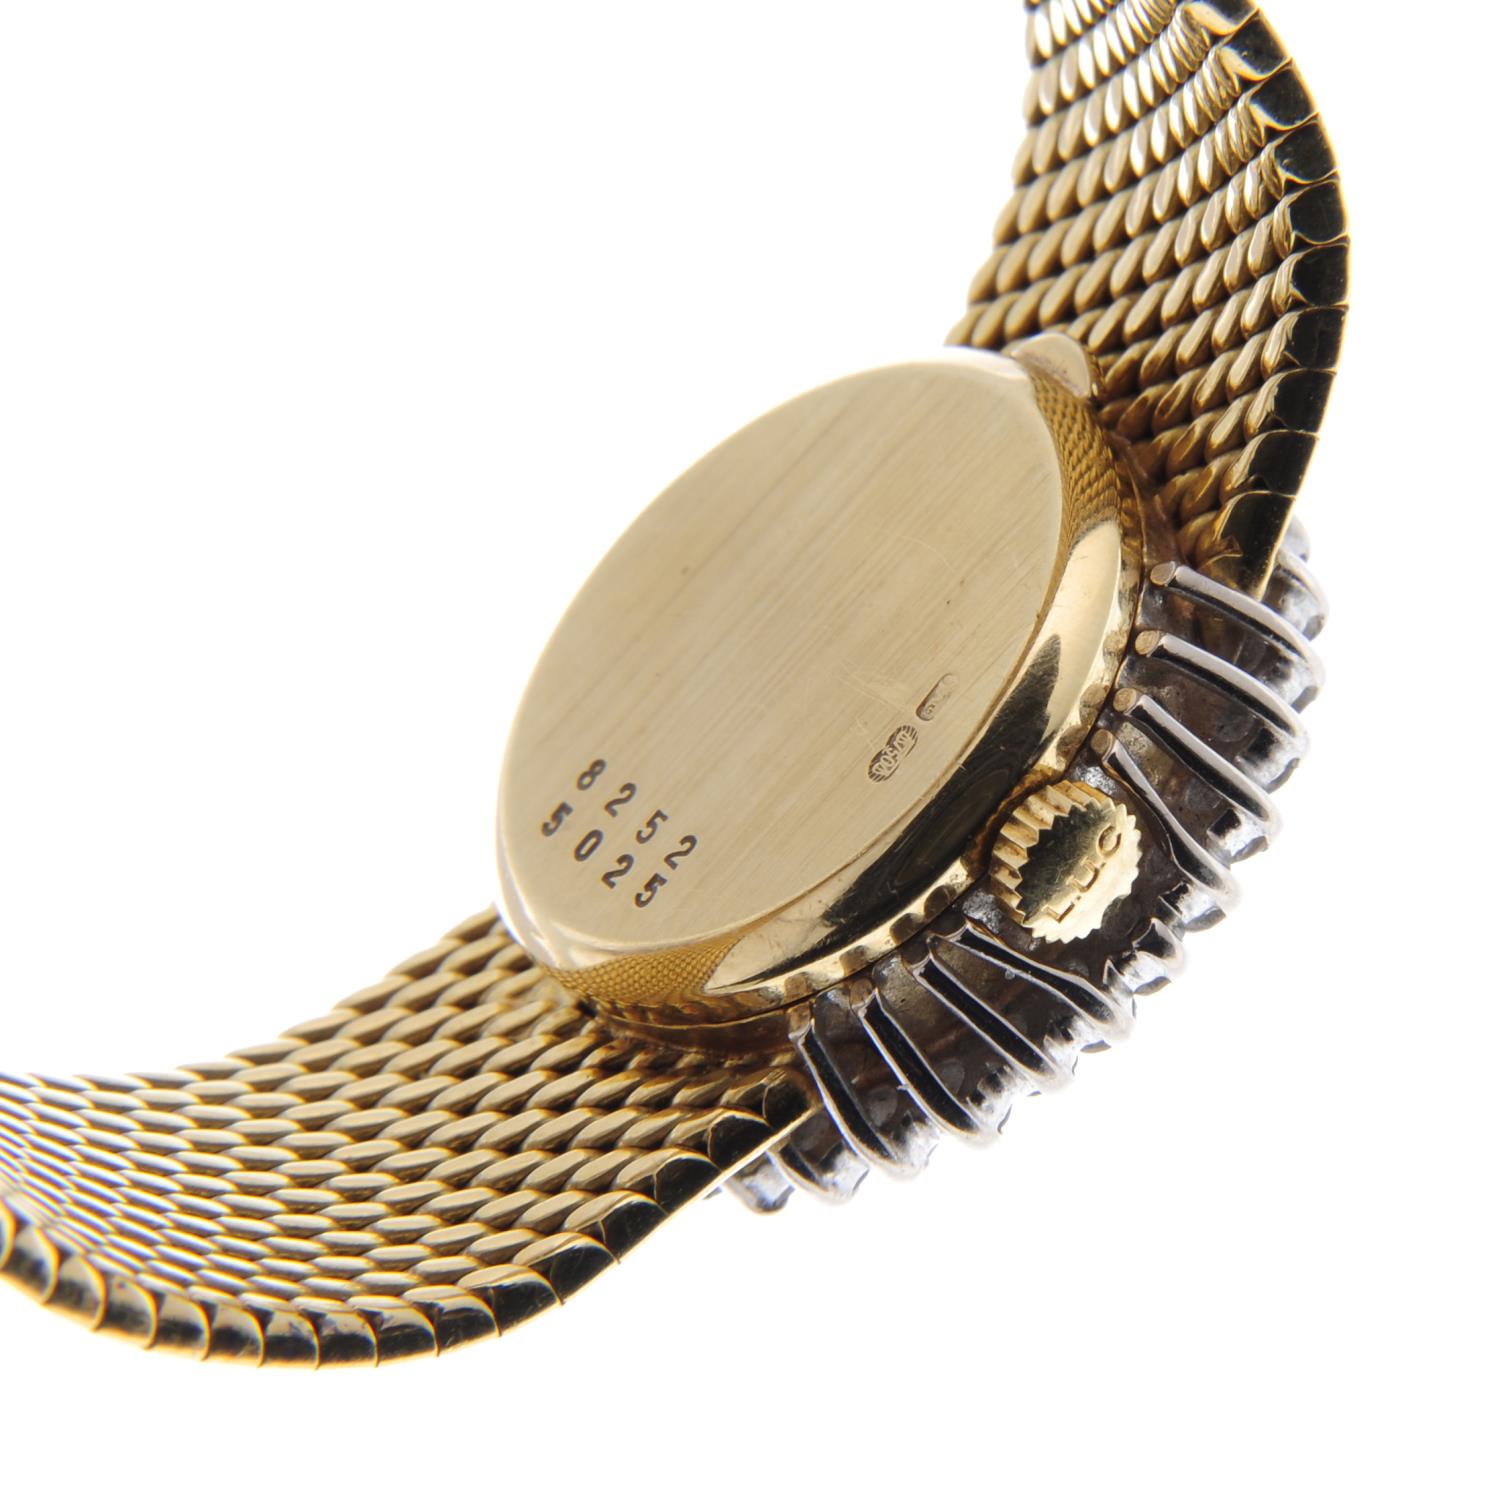 CHOPARD - a lady's bracelet watch. - Image 2 of 2